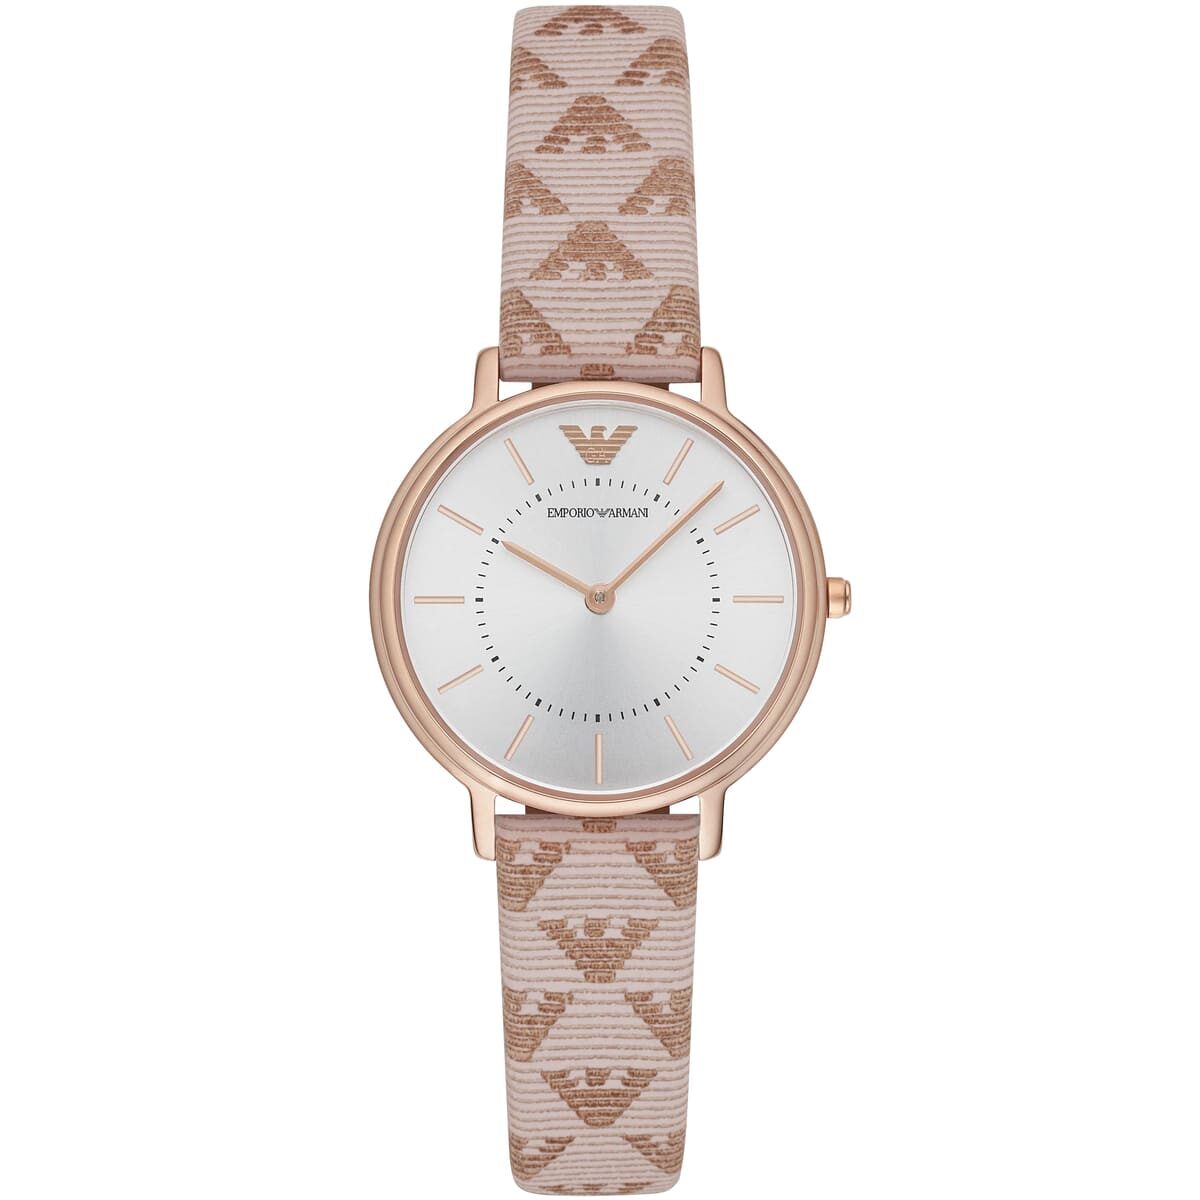 ar11008-emporio-armani-watch-women-gold-dial-leather-beige-strap-quartz-analog-two-hand-kappa